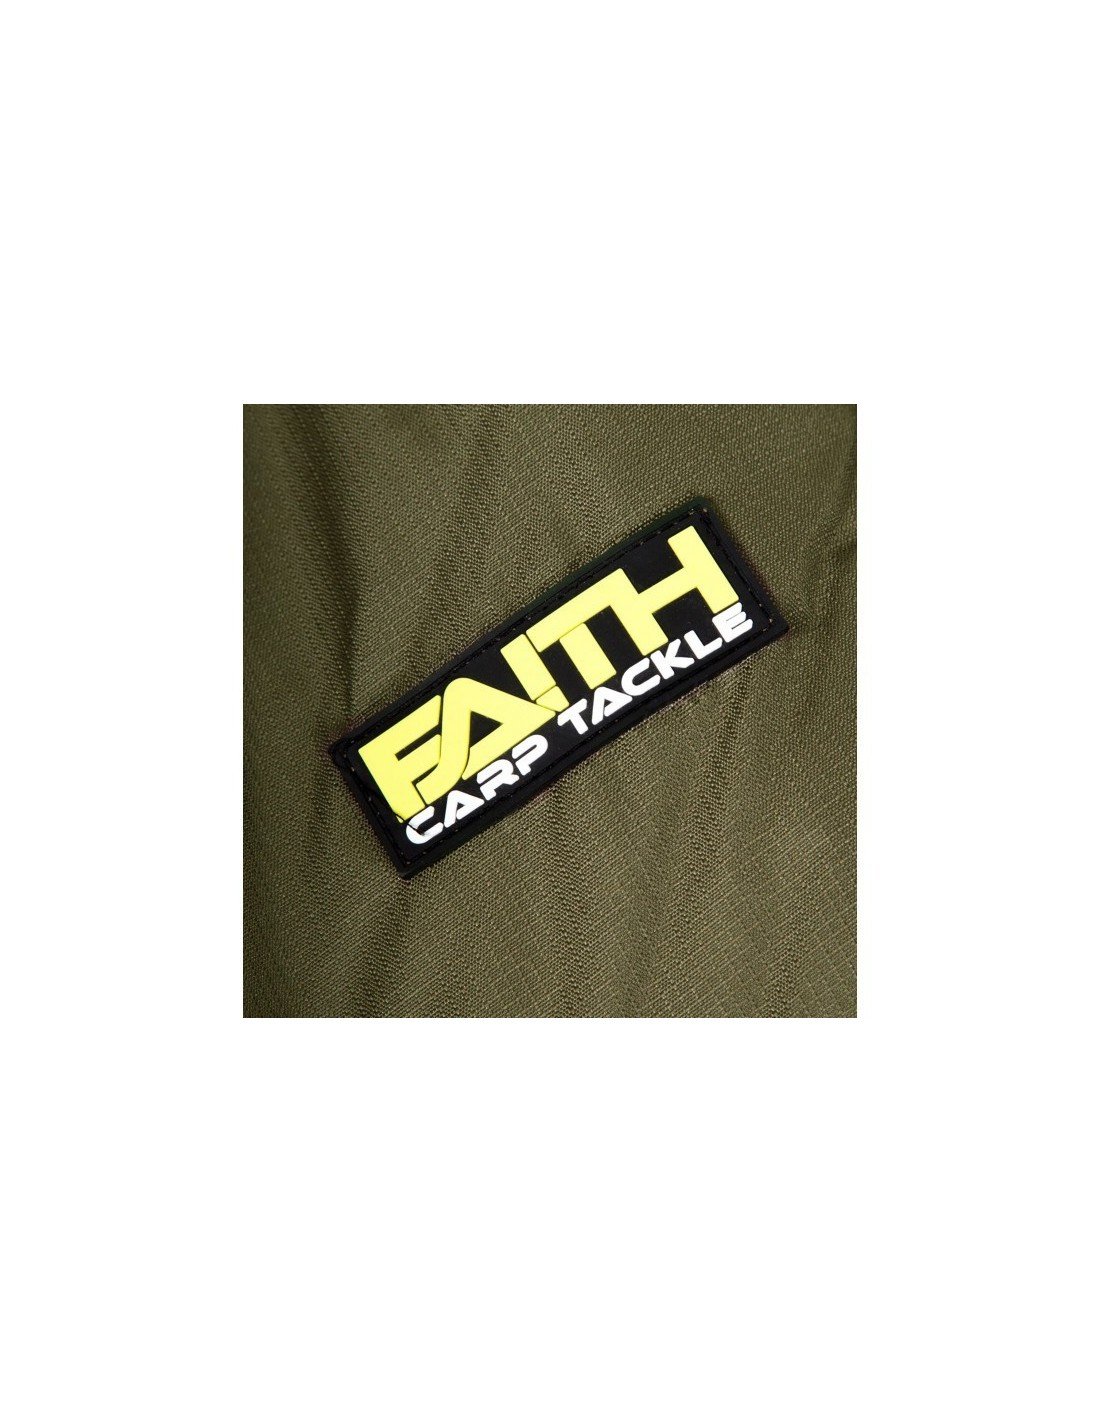 Faith HW-XL 5 Season Sleeping Bag спален чувал